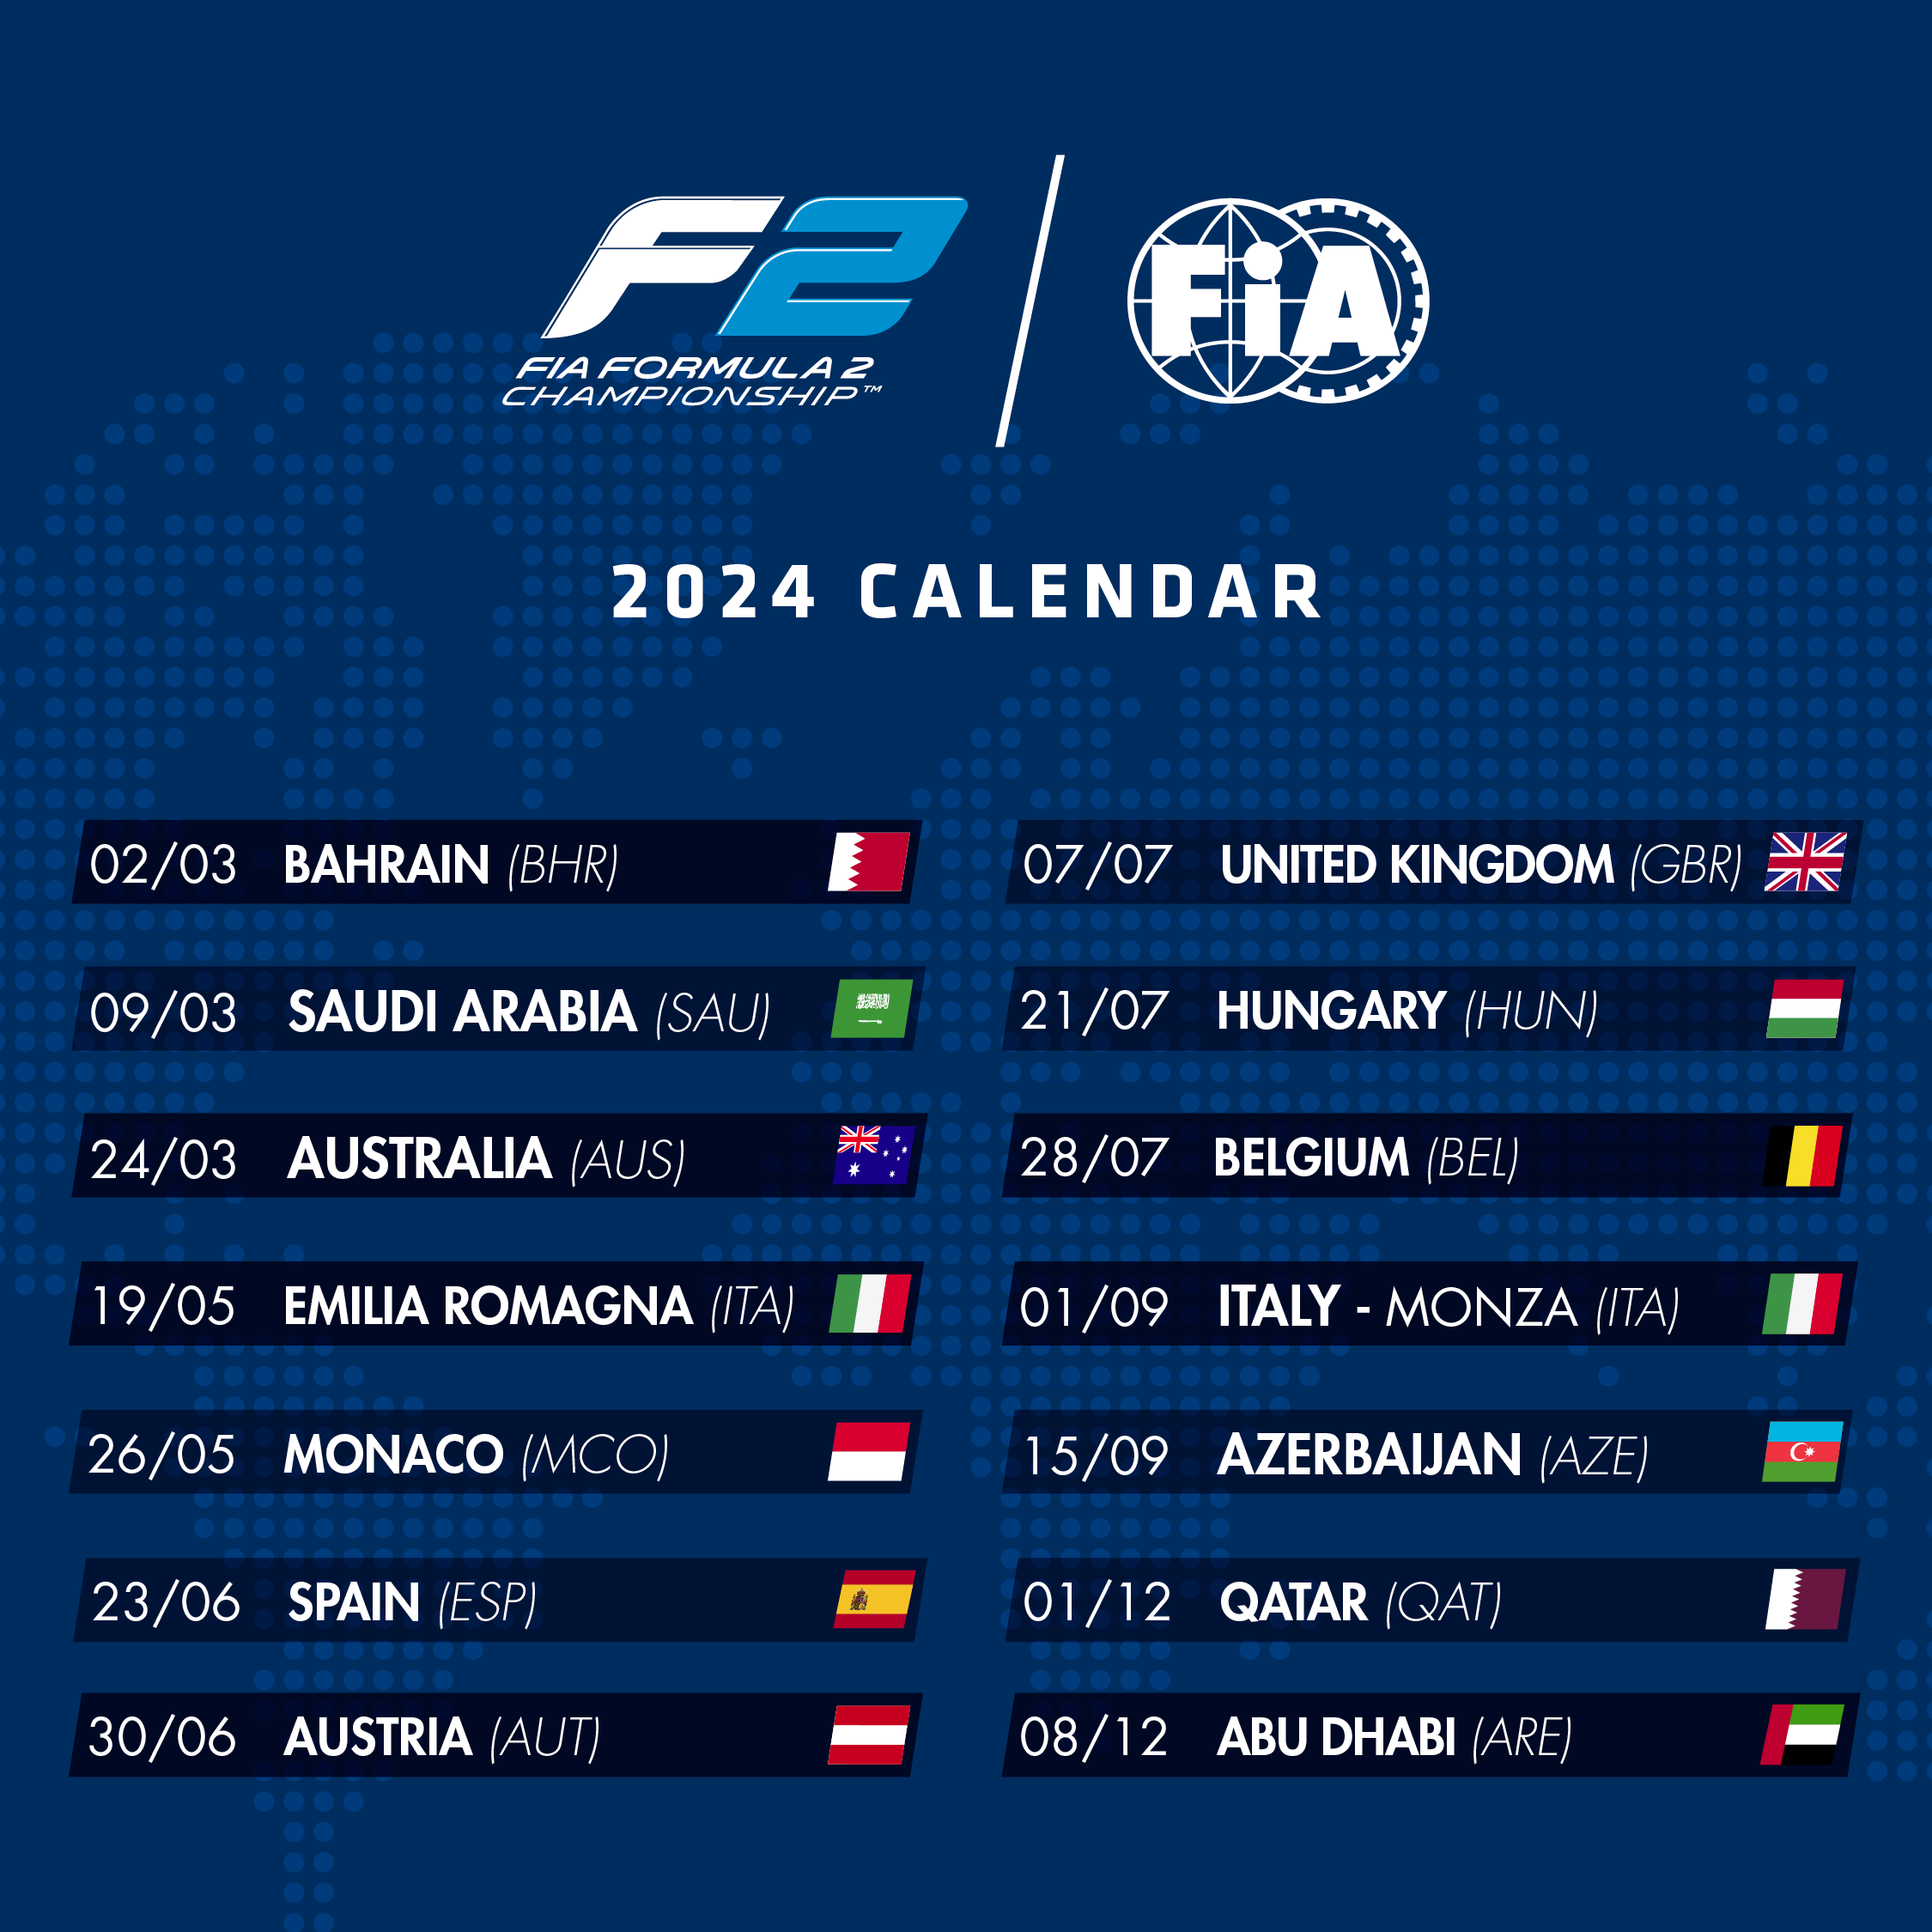 fia-formula-2-championship-2024-season-calendar-announced-federation-internationale-de-l